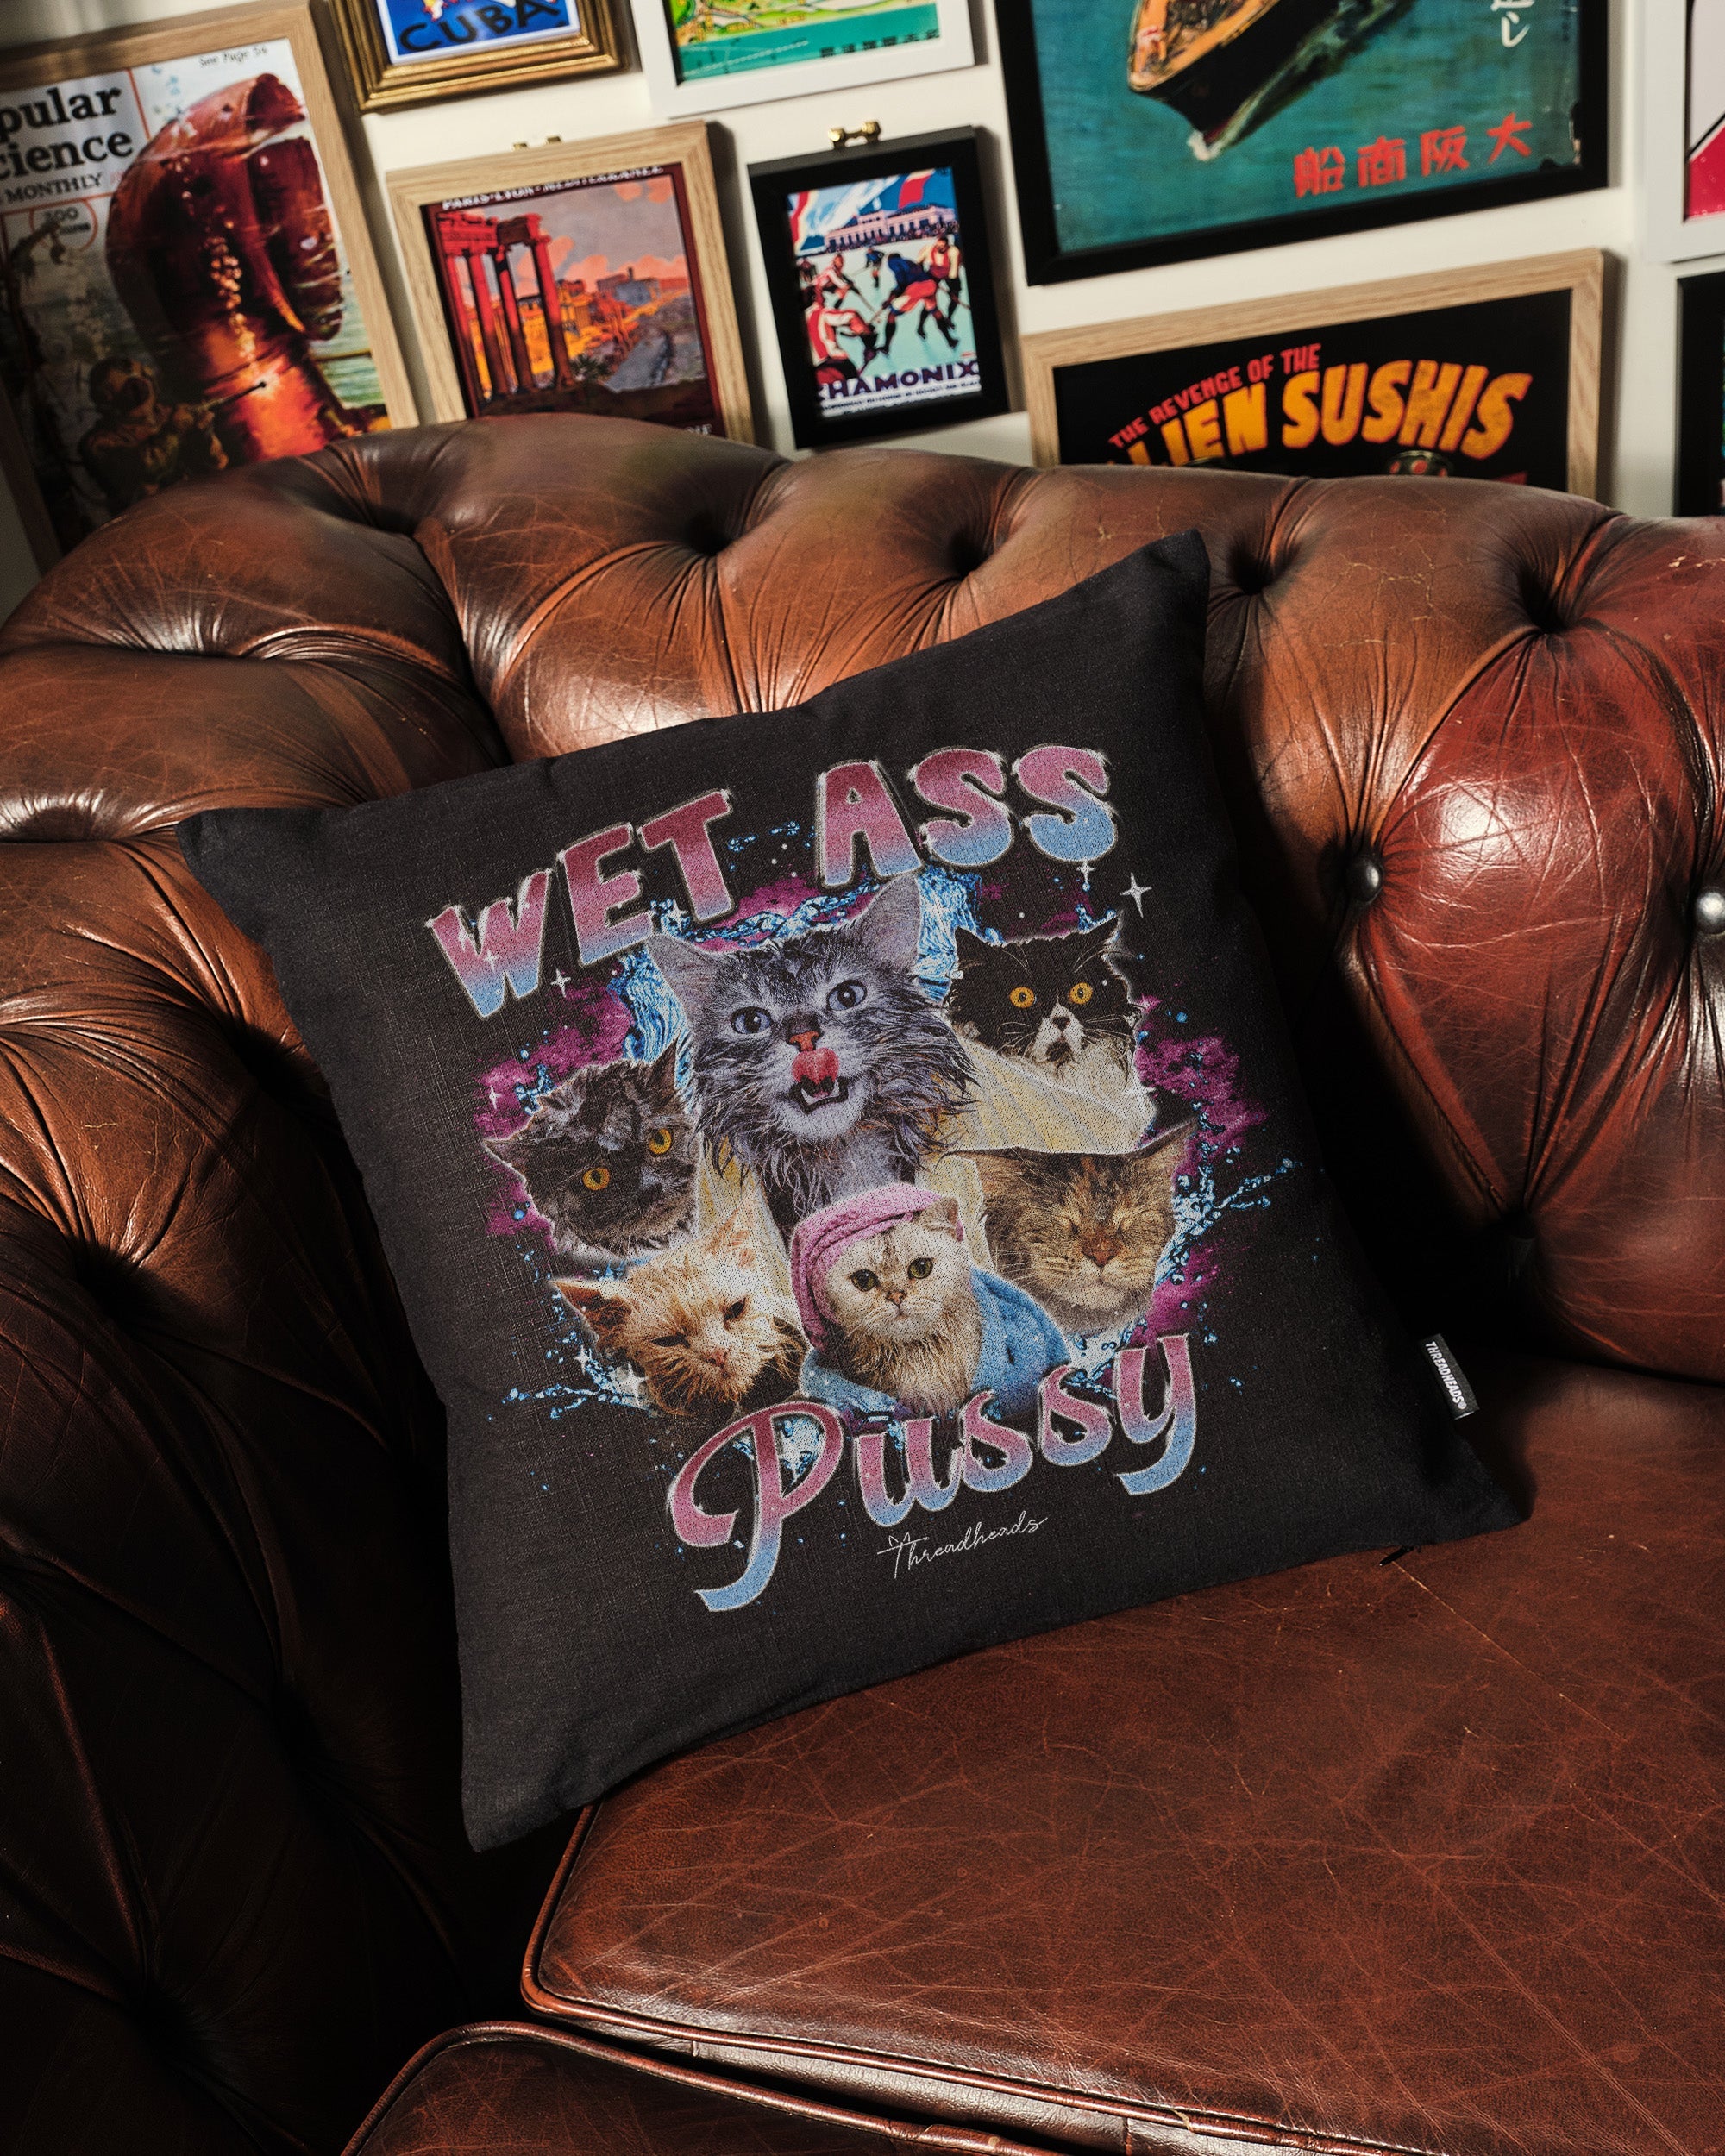 WAP Cat Cushion Australia Online Black